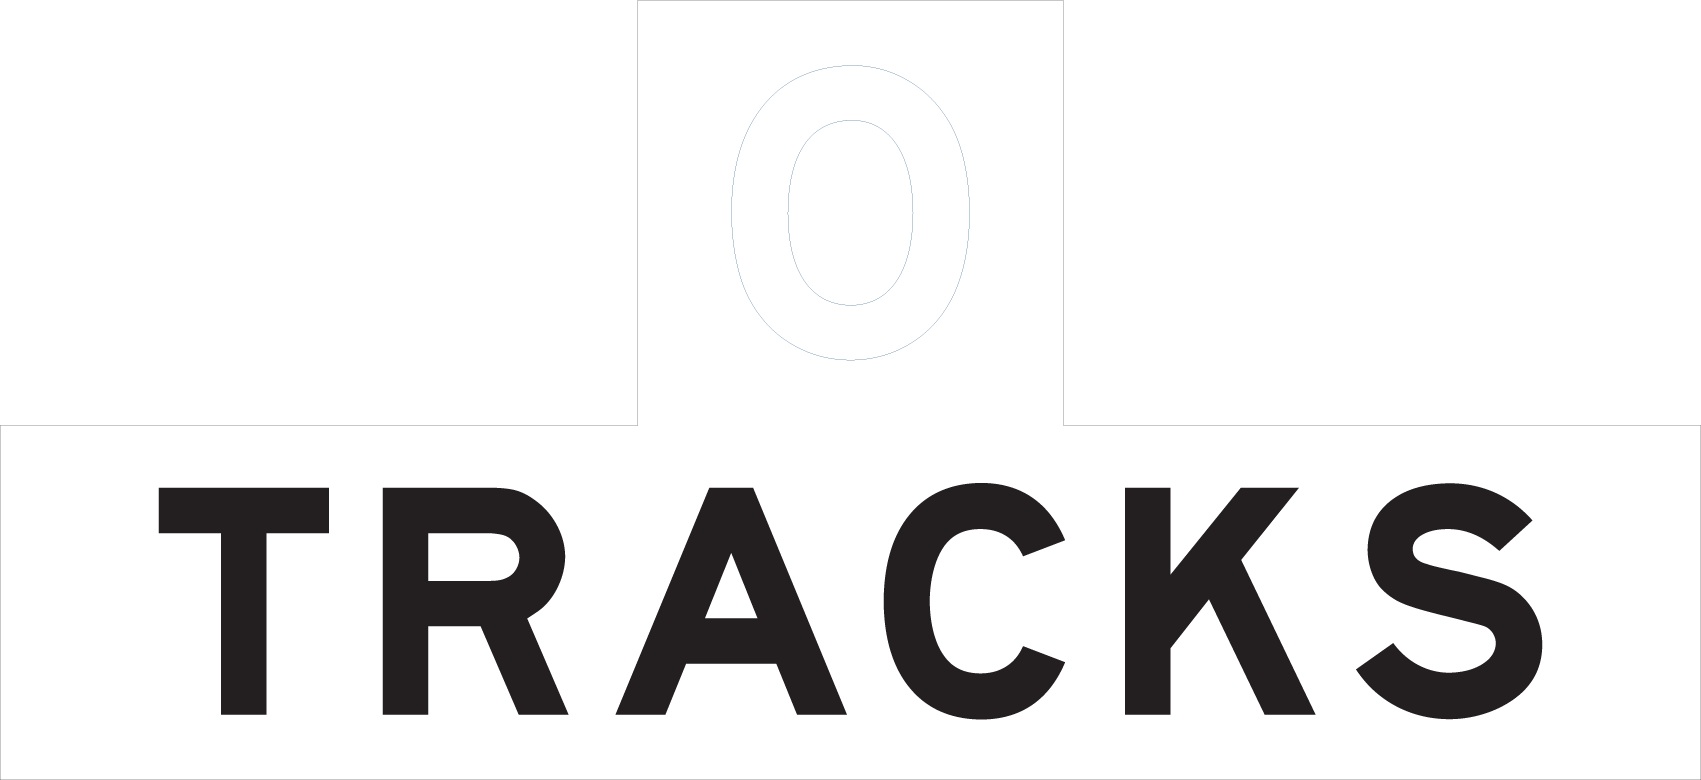 W7 Logo - 2 TRACKS | Jason SignMakers